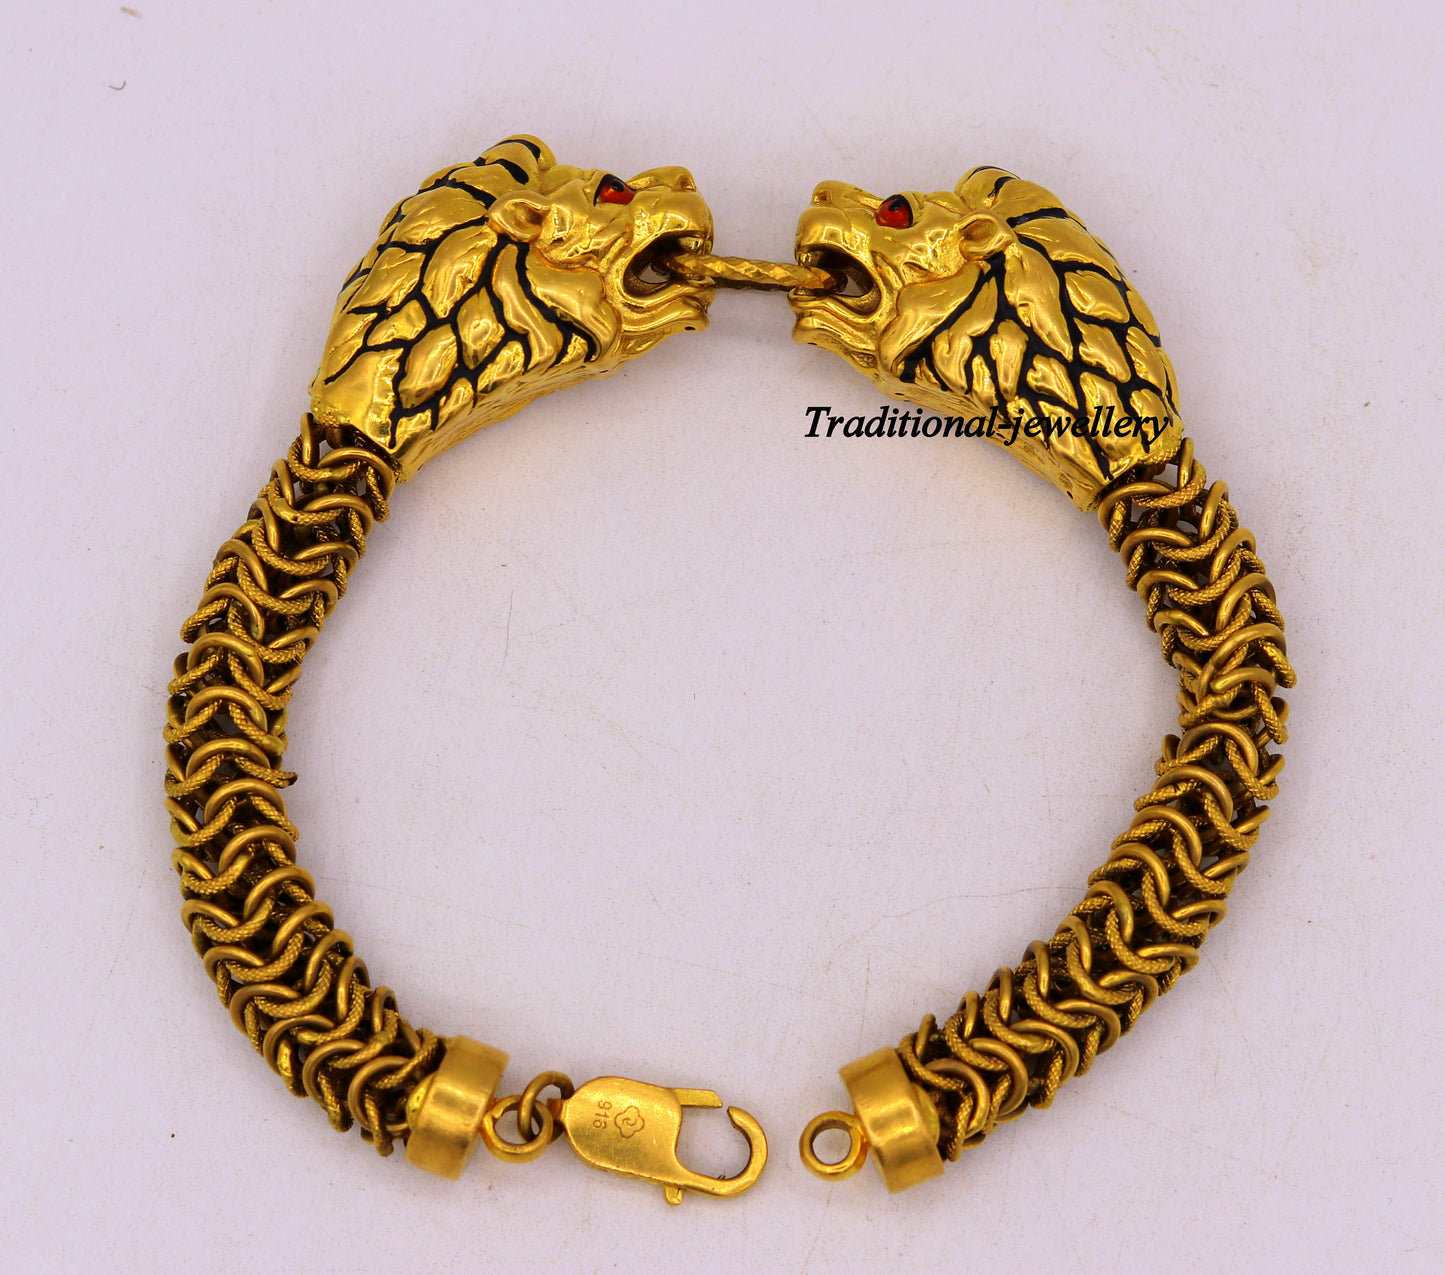 Indian Traditional cultural lion face Design bracelet hallmarked 22kt yellow gold men's bracelet lion head unique wrist bracelet gbr44 8